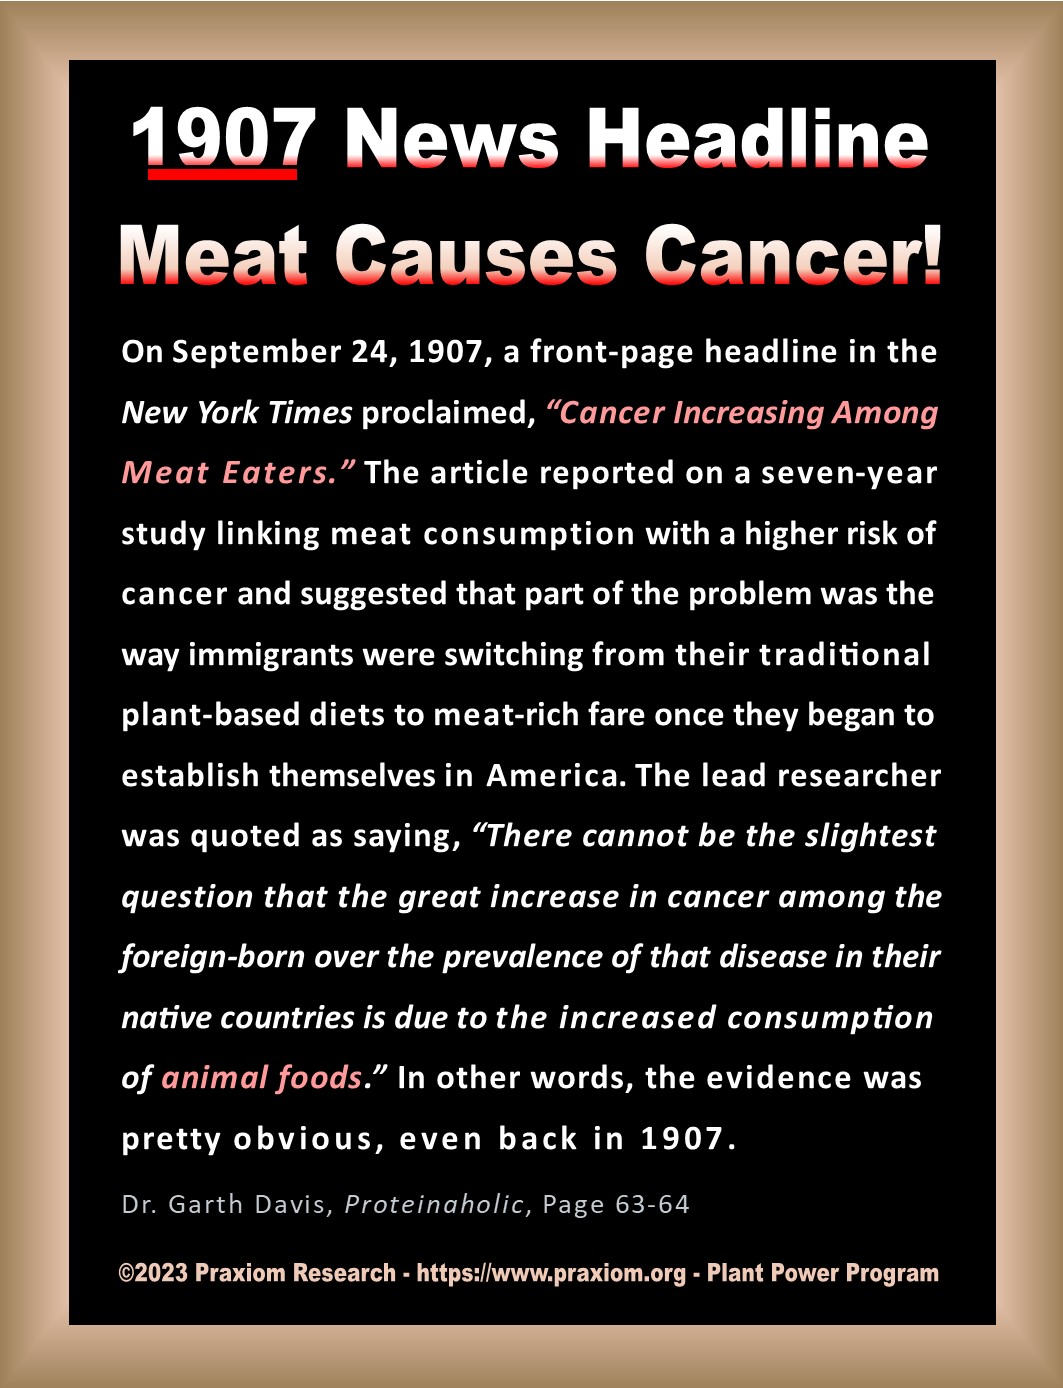 1907 News Headline: Meat Causes Cancer - Dr. Garth Davis